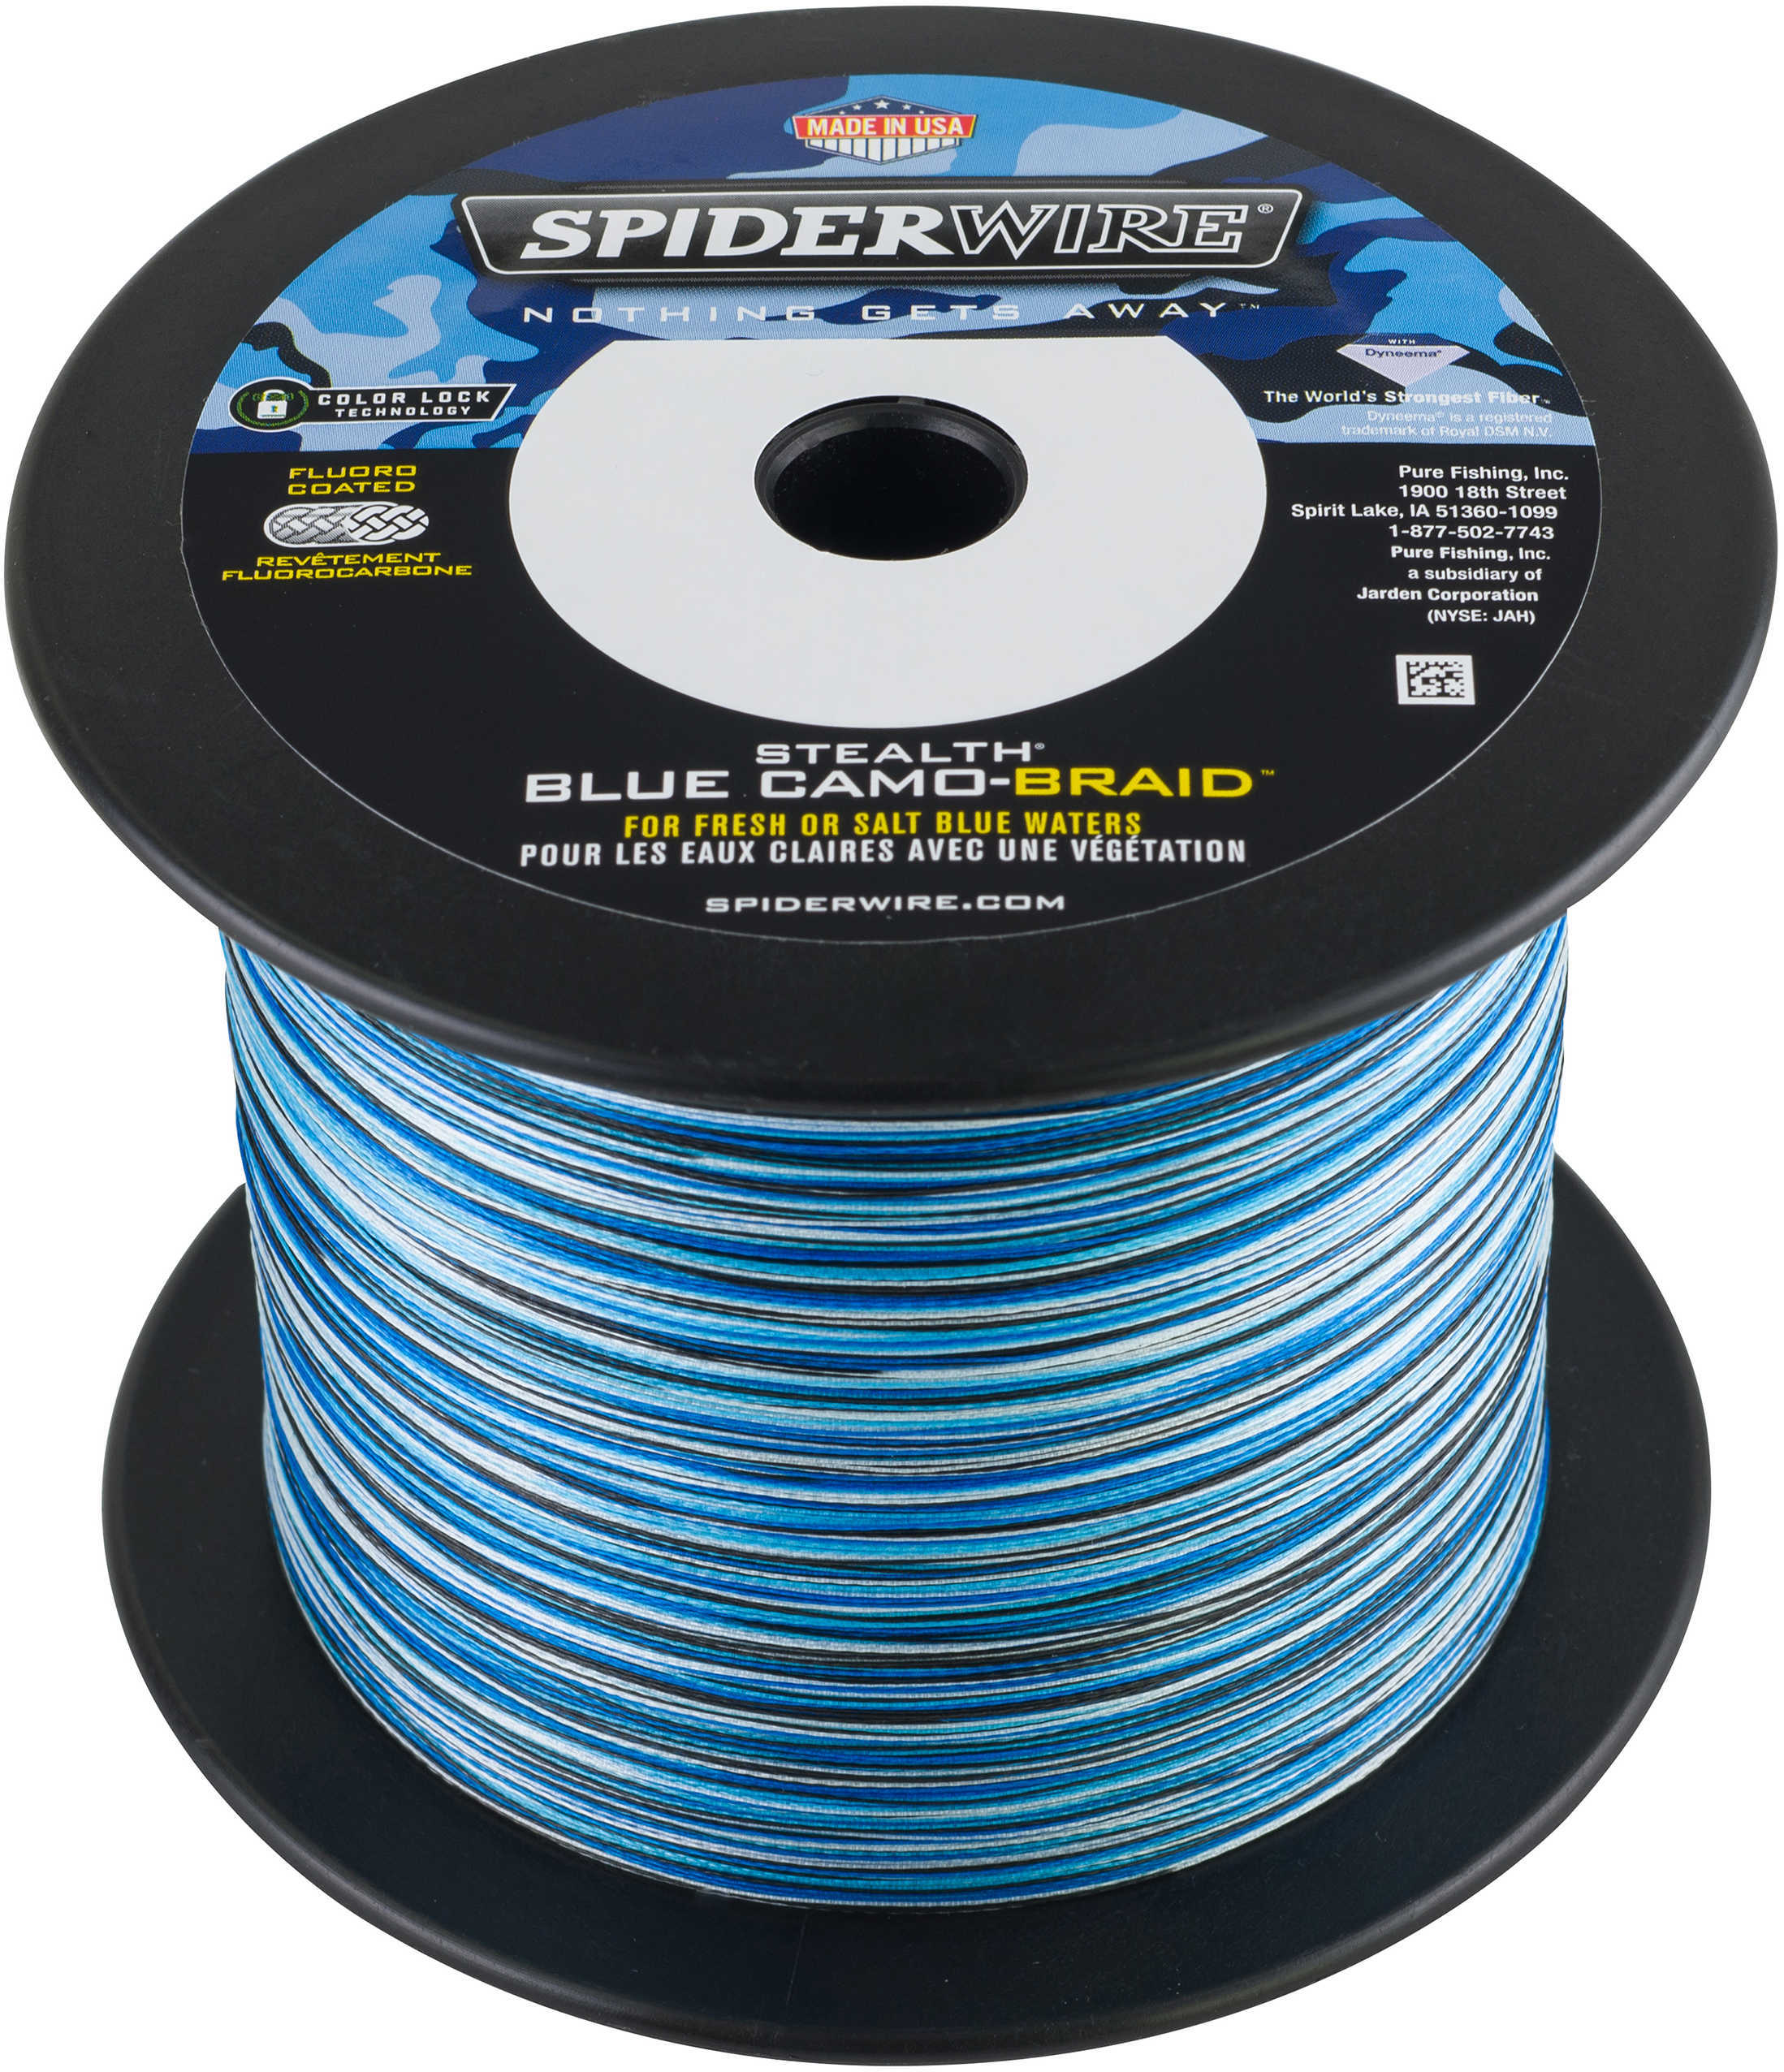 Spiderwire Stealth Braid 1500 Yards , 100 lbs Strength, 0.020" Diameter, Blue Camo Md: 1370461